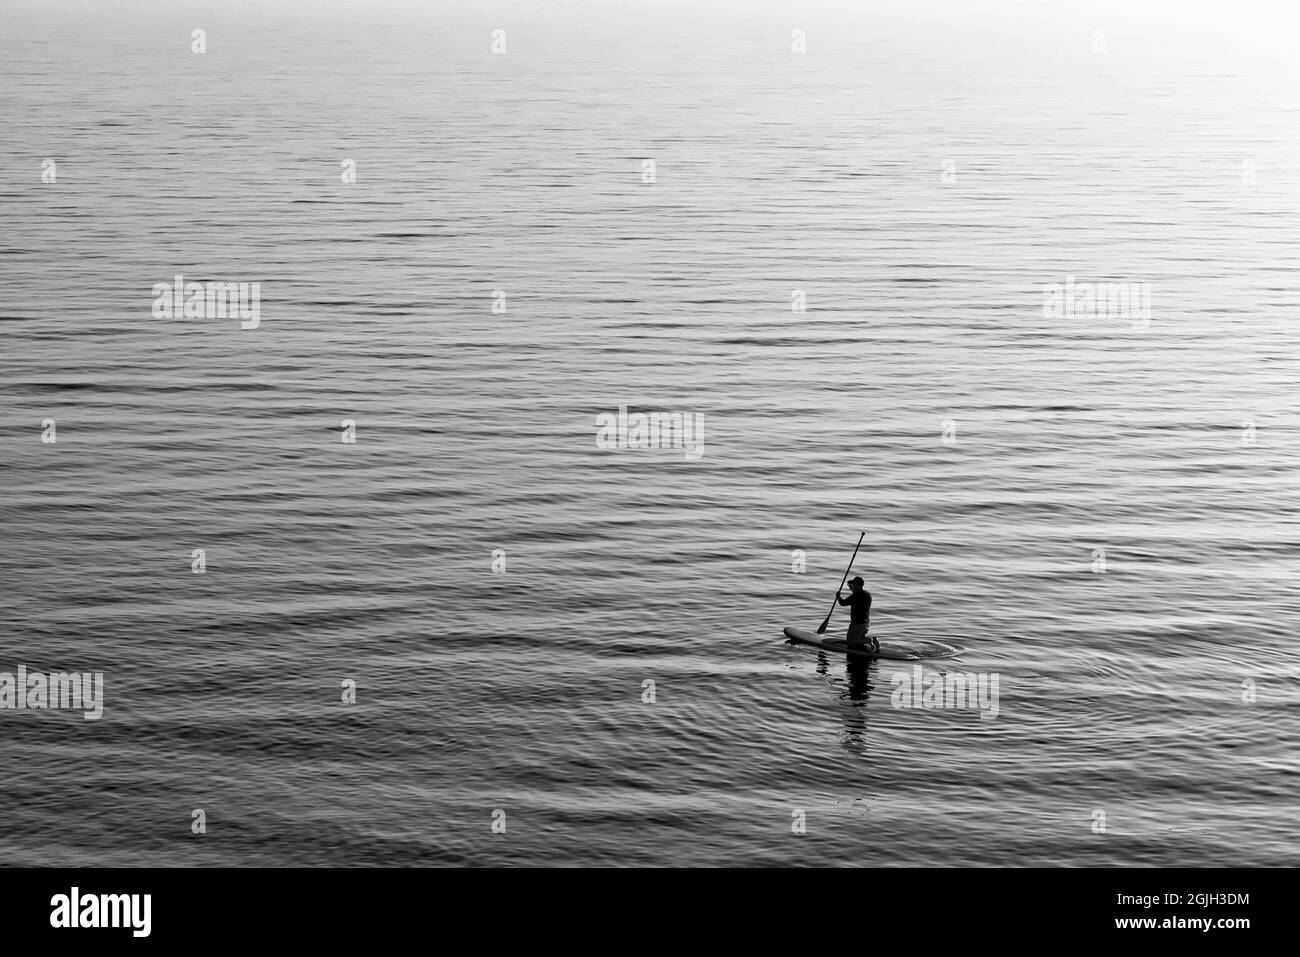 Man paddle boarding on sea Stock Photo